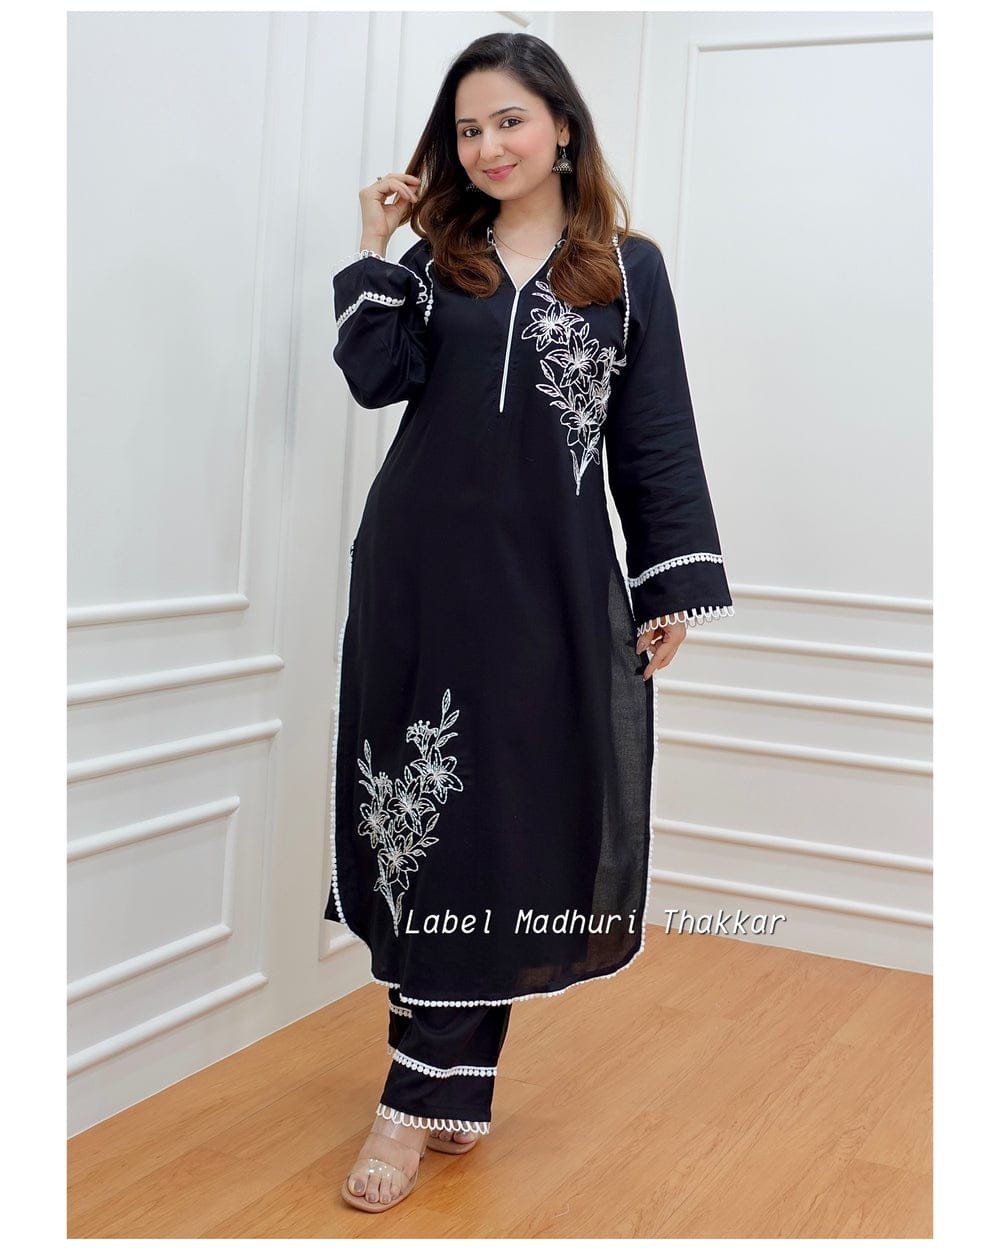 Edathal Star Collection's Elegant Rayon Black Pakistani Kurta Set